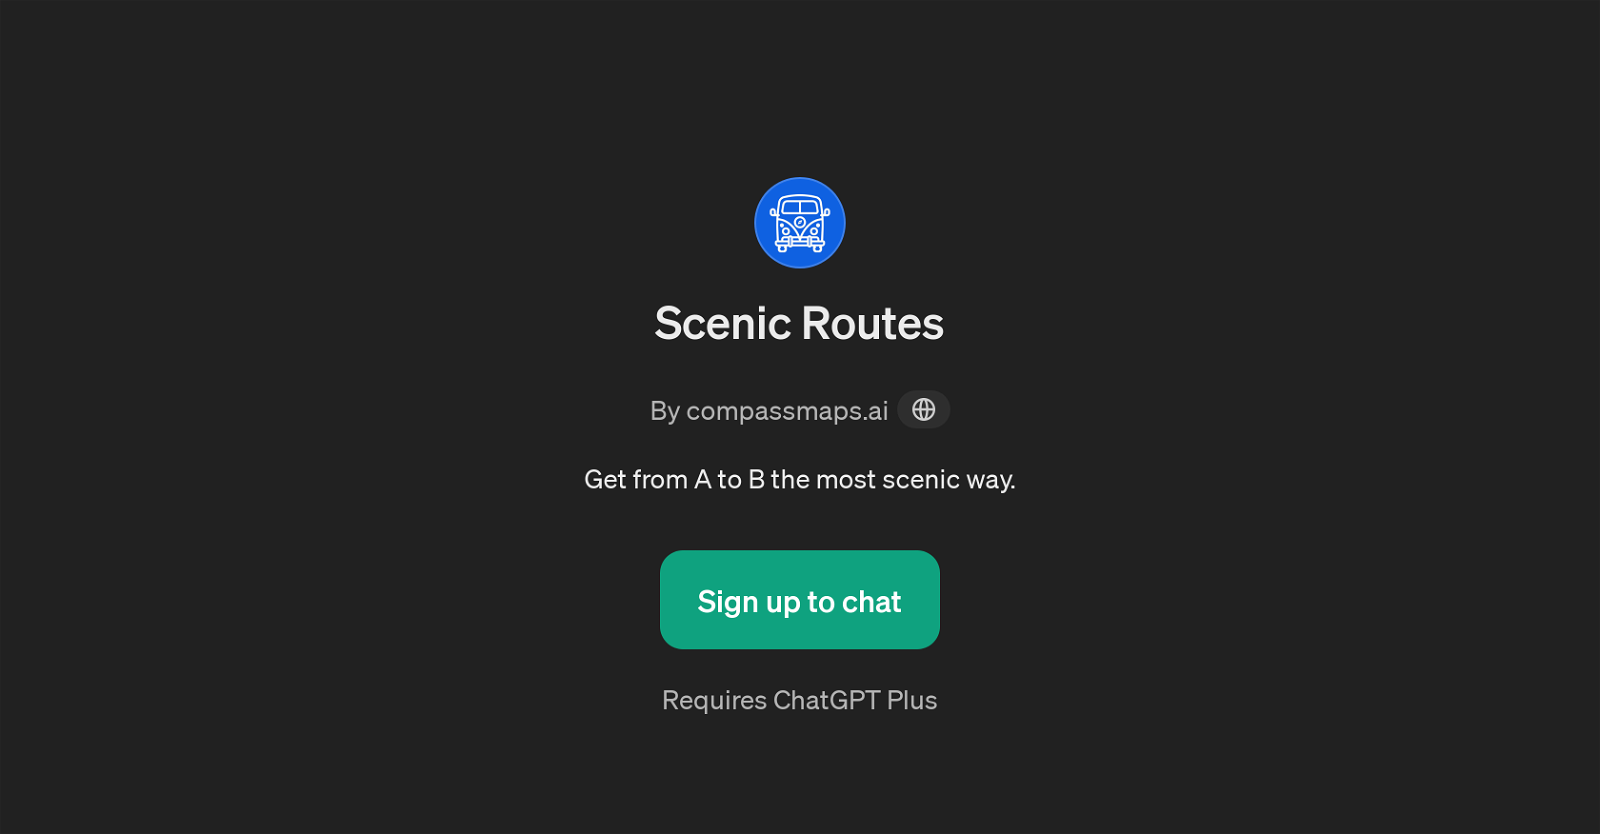 Scenic Routes website